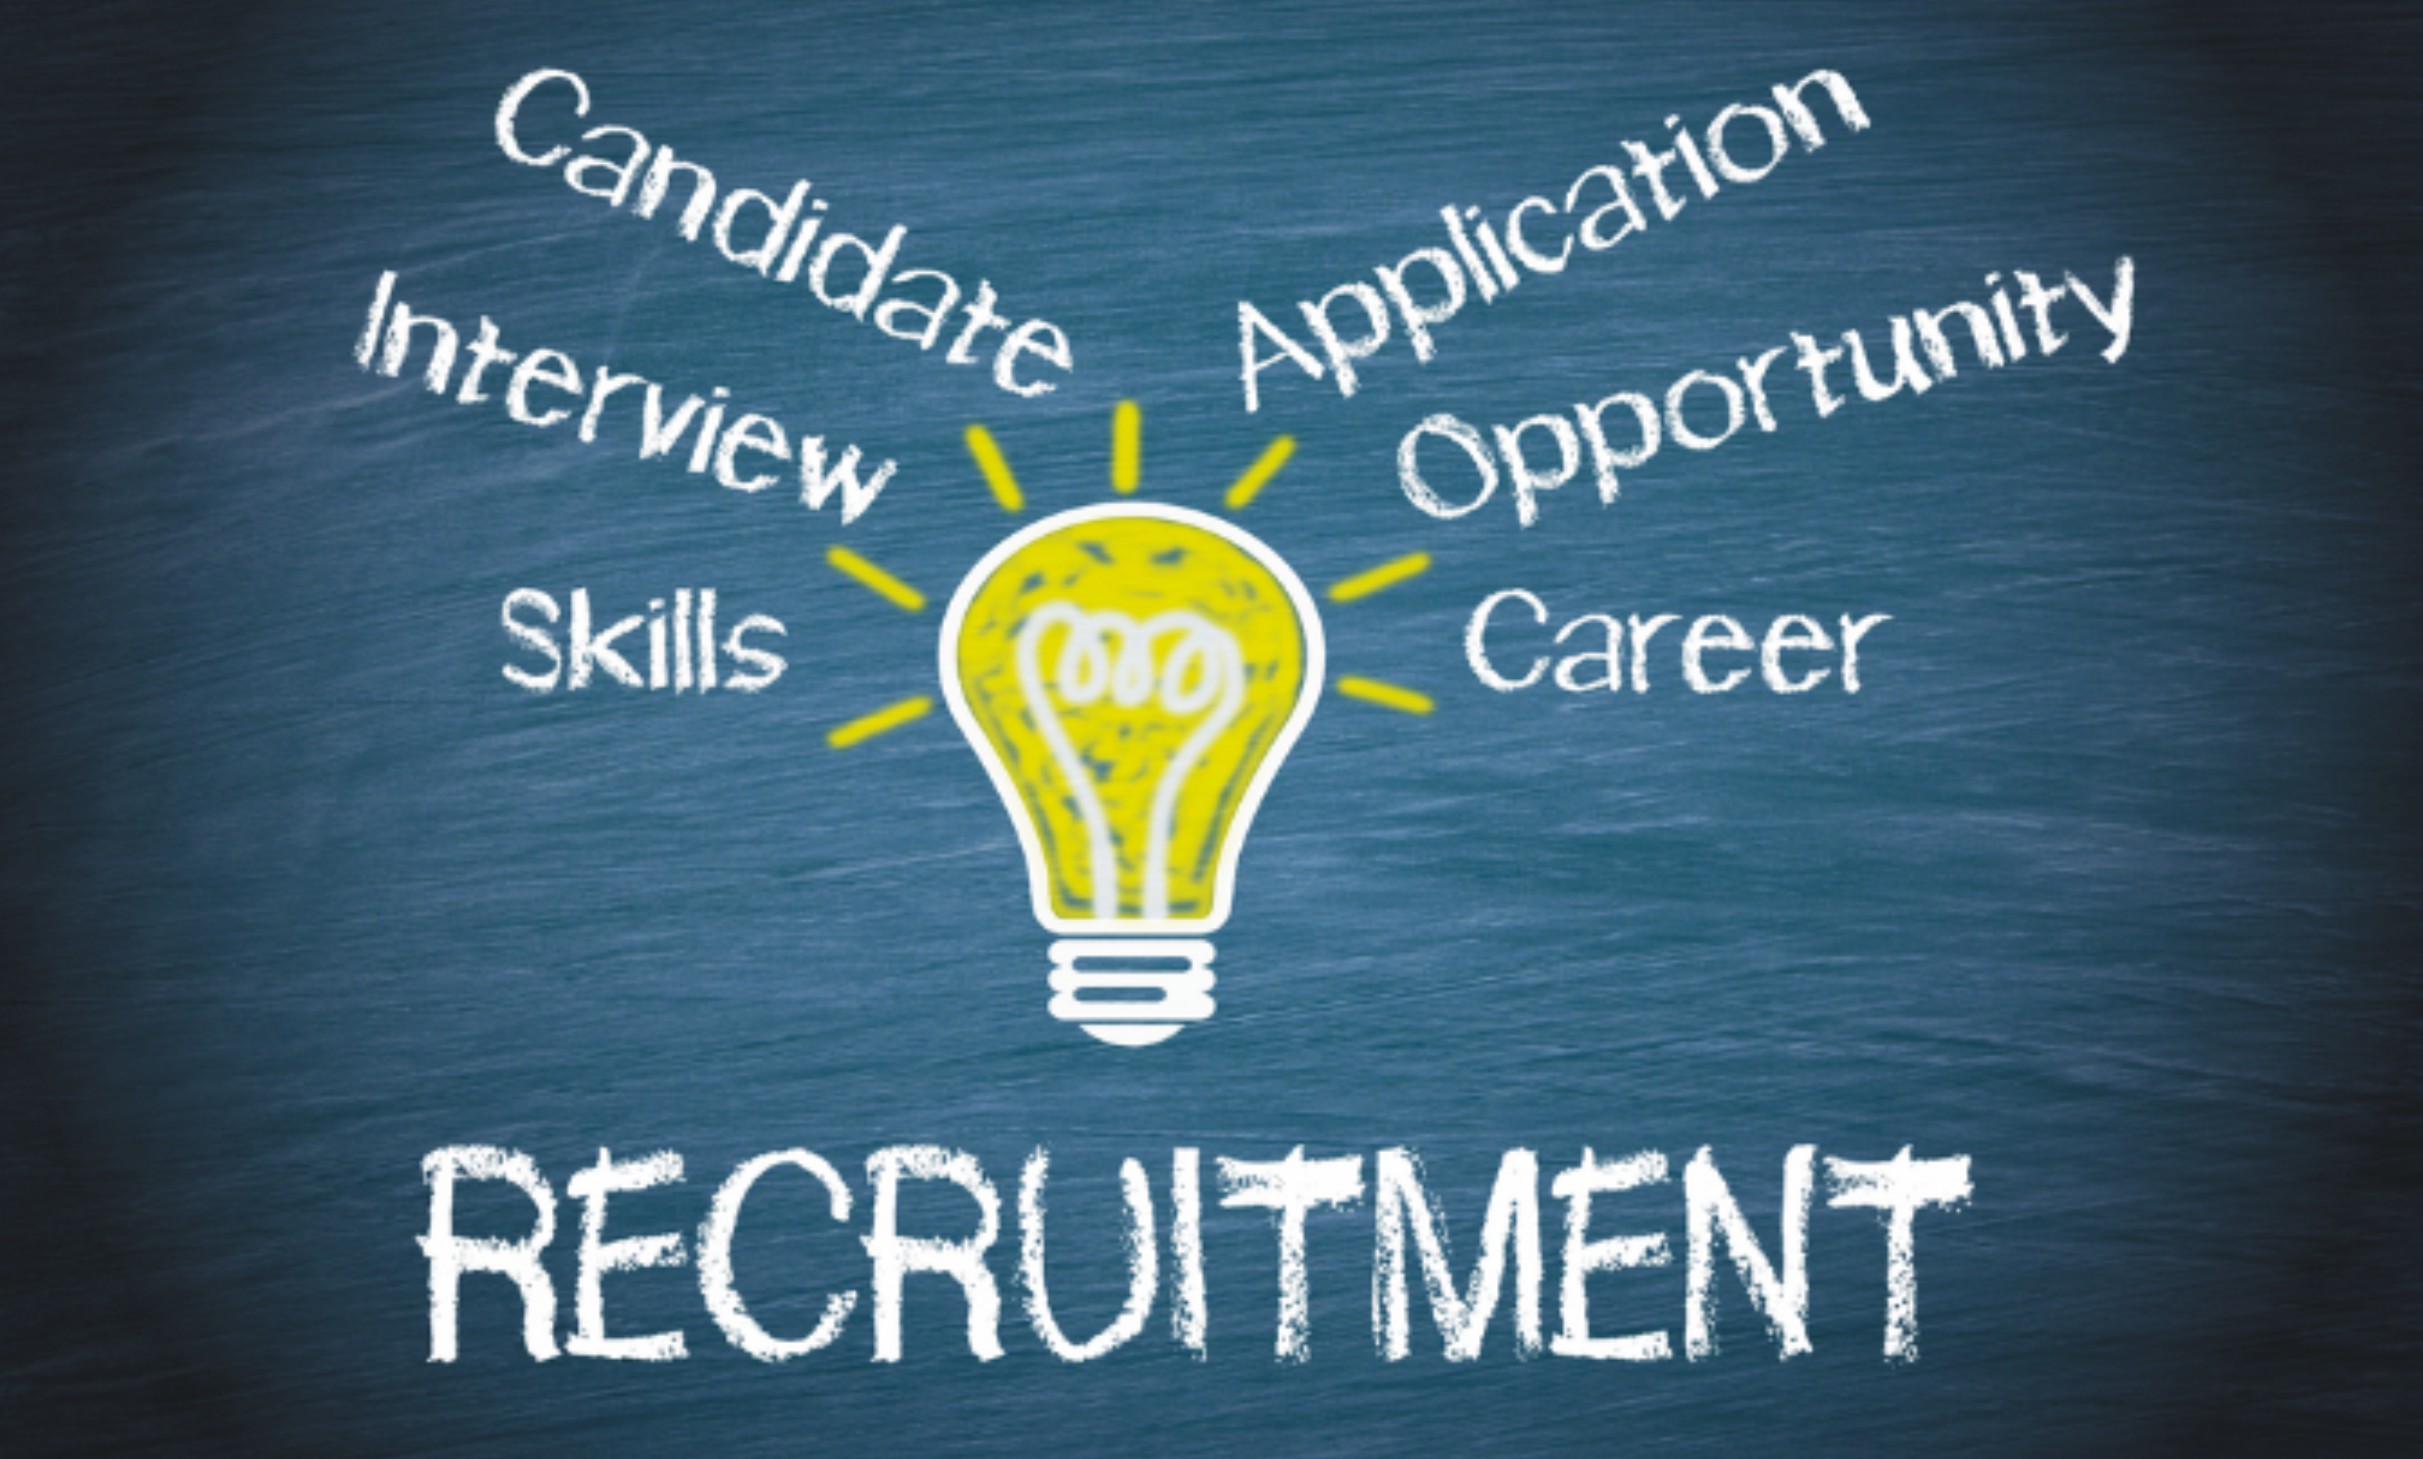 Recruitment Agency Business Plan in Nigeria